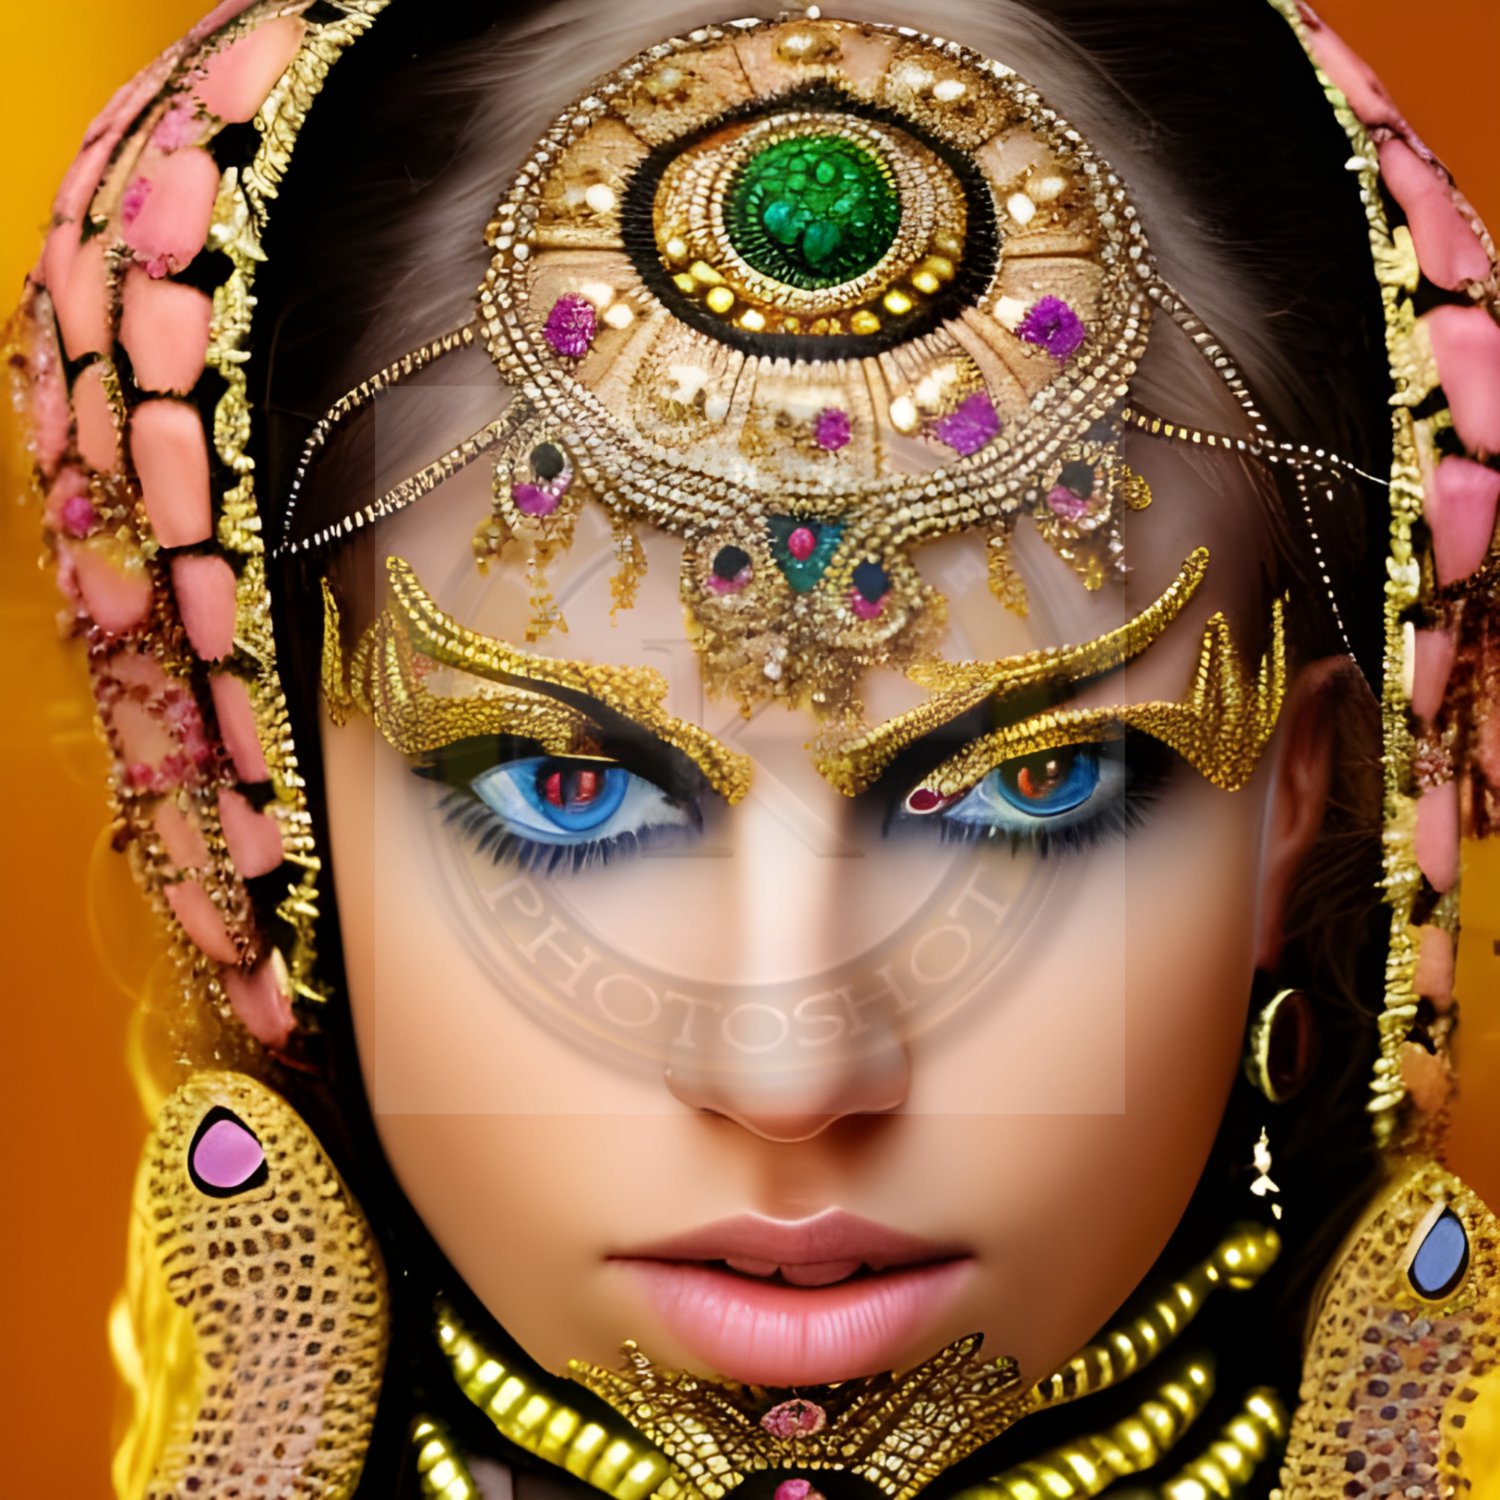 Persian princess portrait